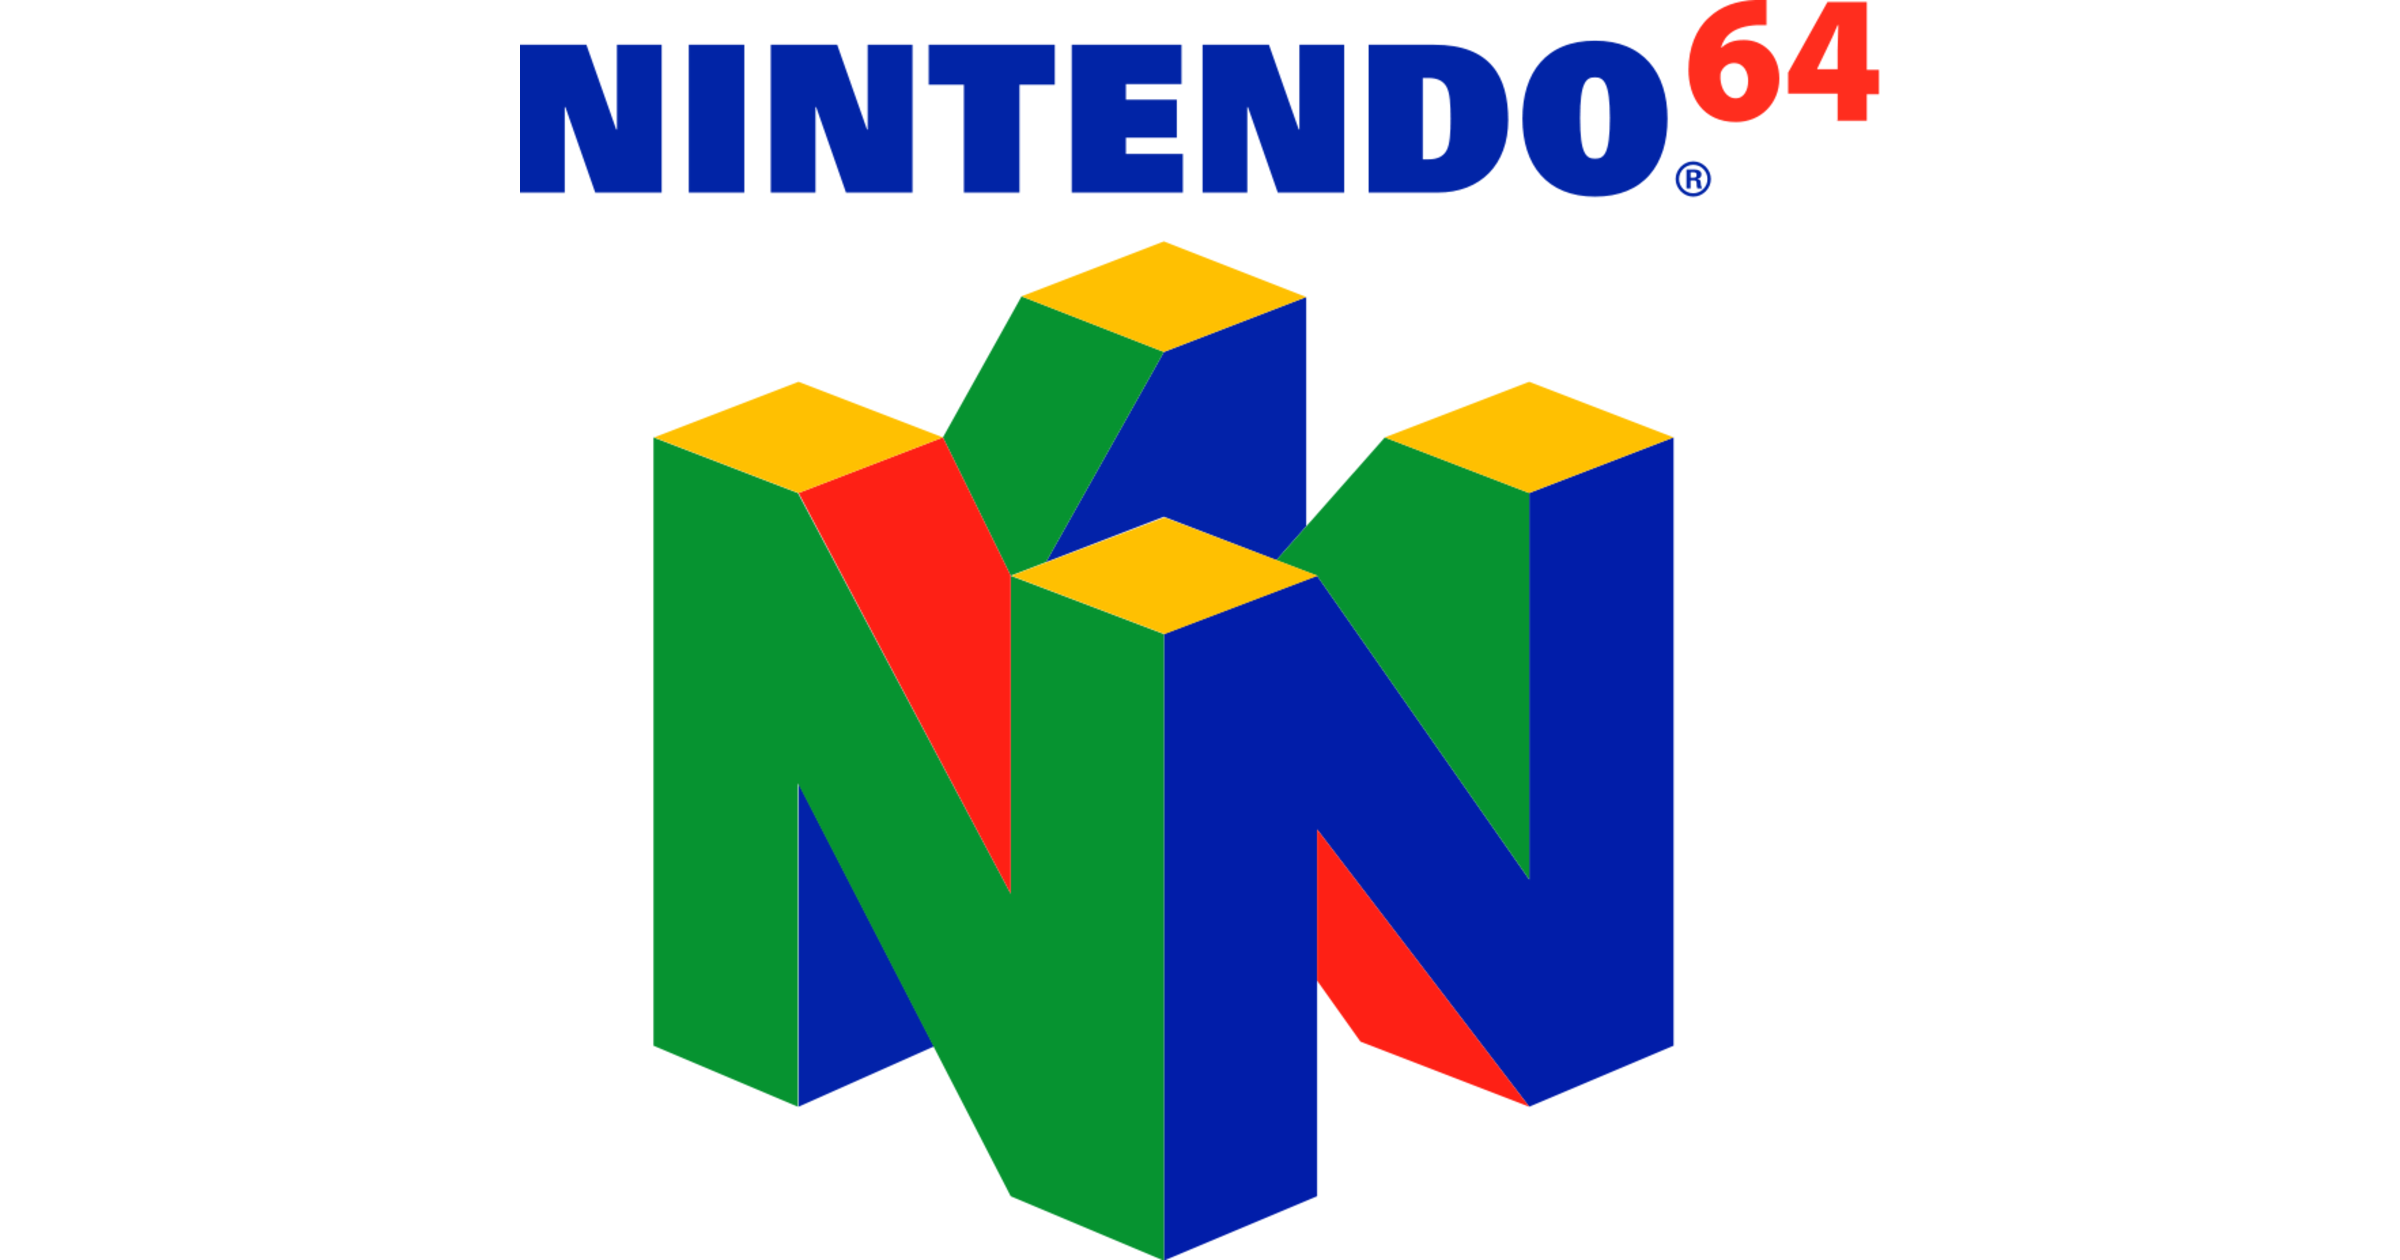 n64 logo png